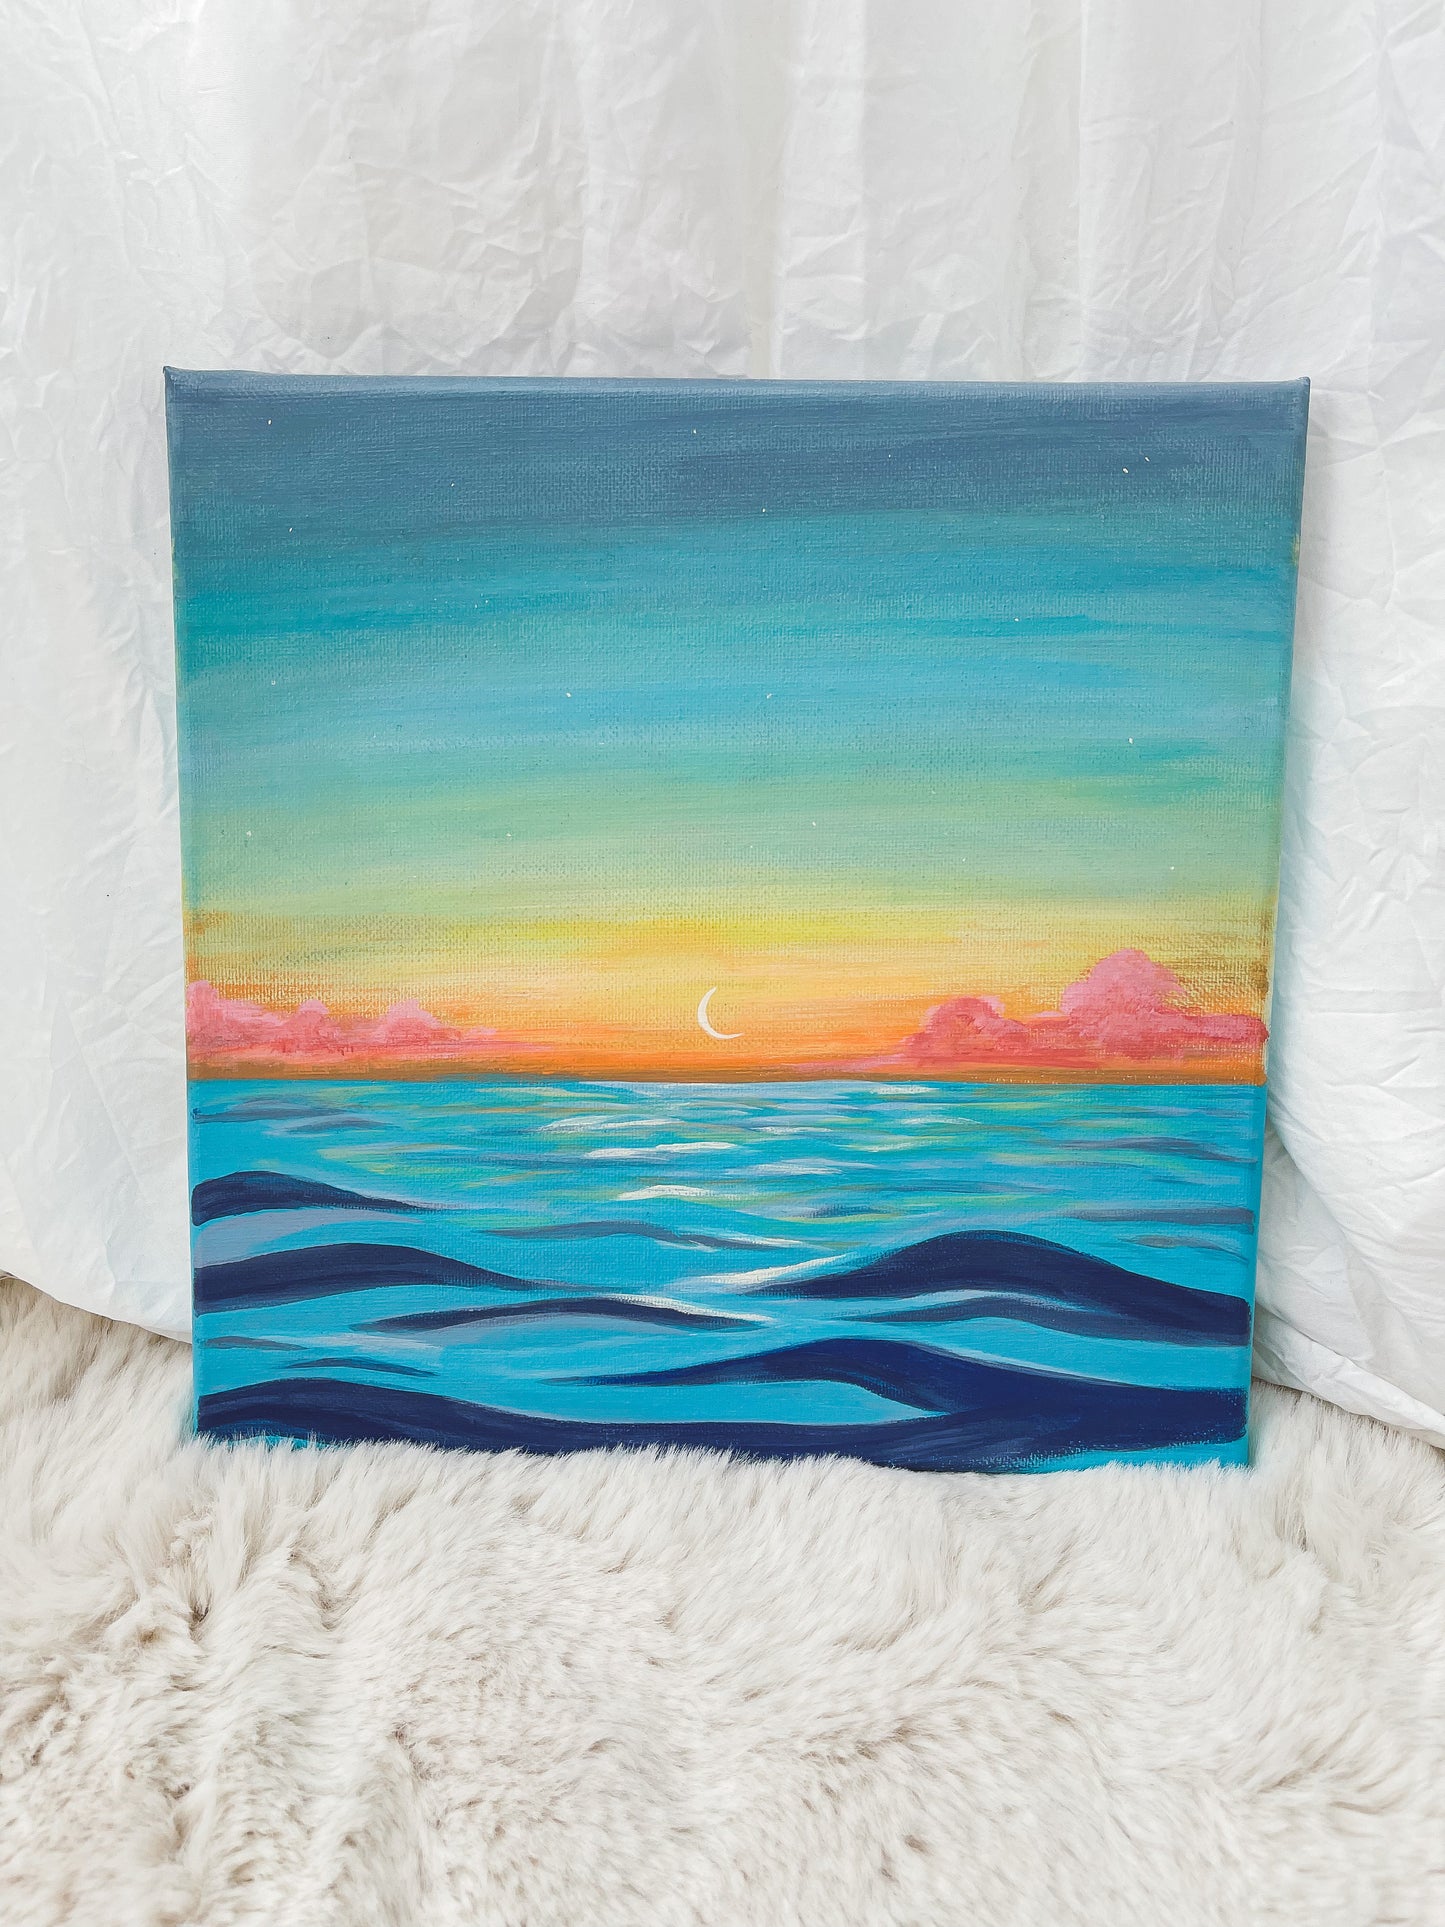 Seascape Sunset Acrylic Painting | Ready to Ship